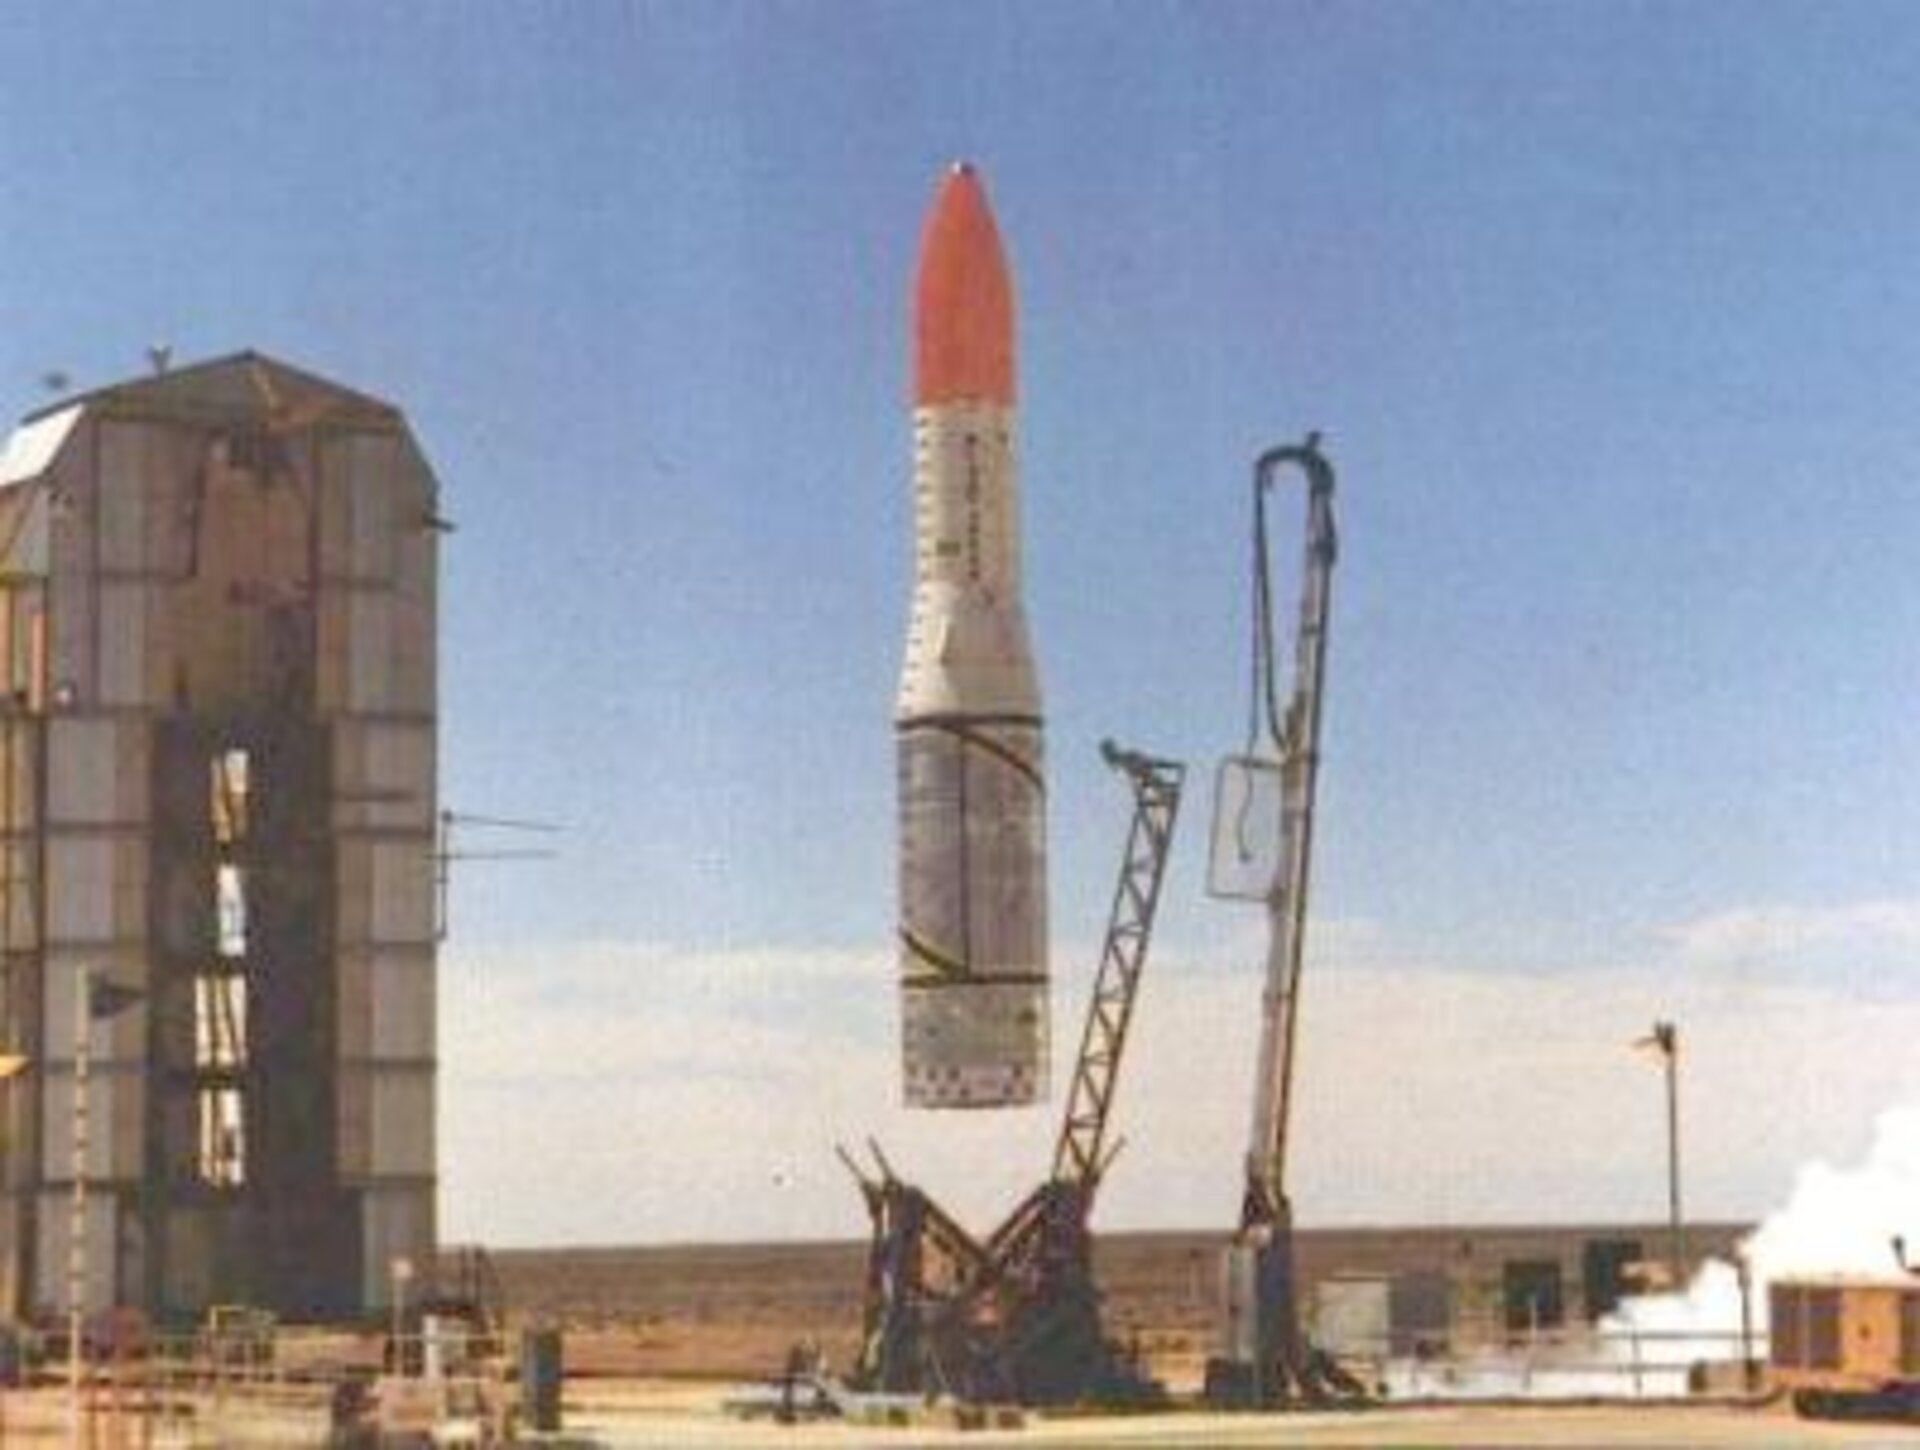 Black Arrow launches Prospero from Woomera on 28 October 1971